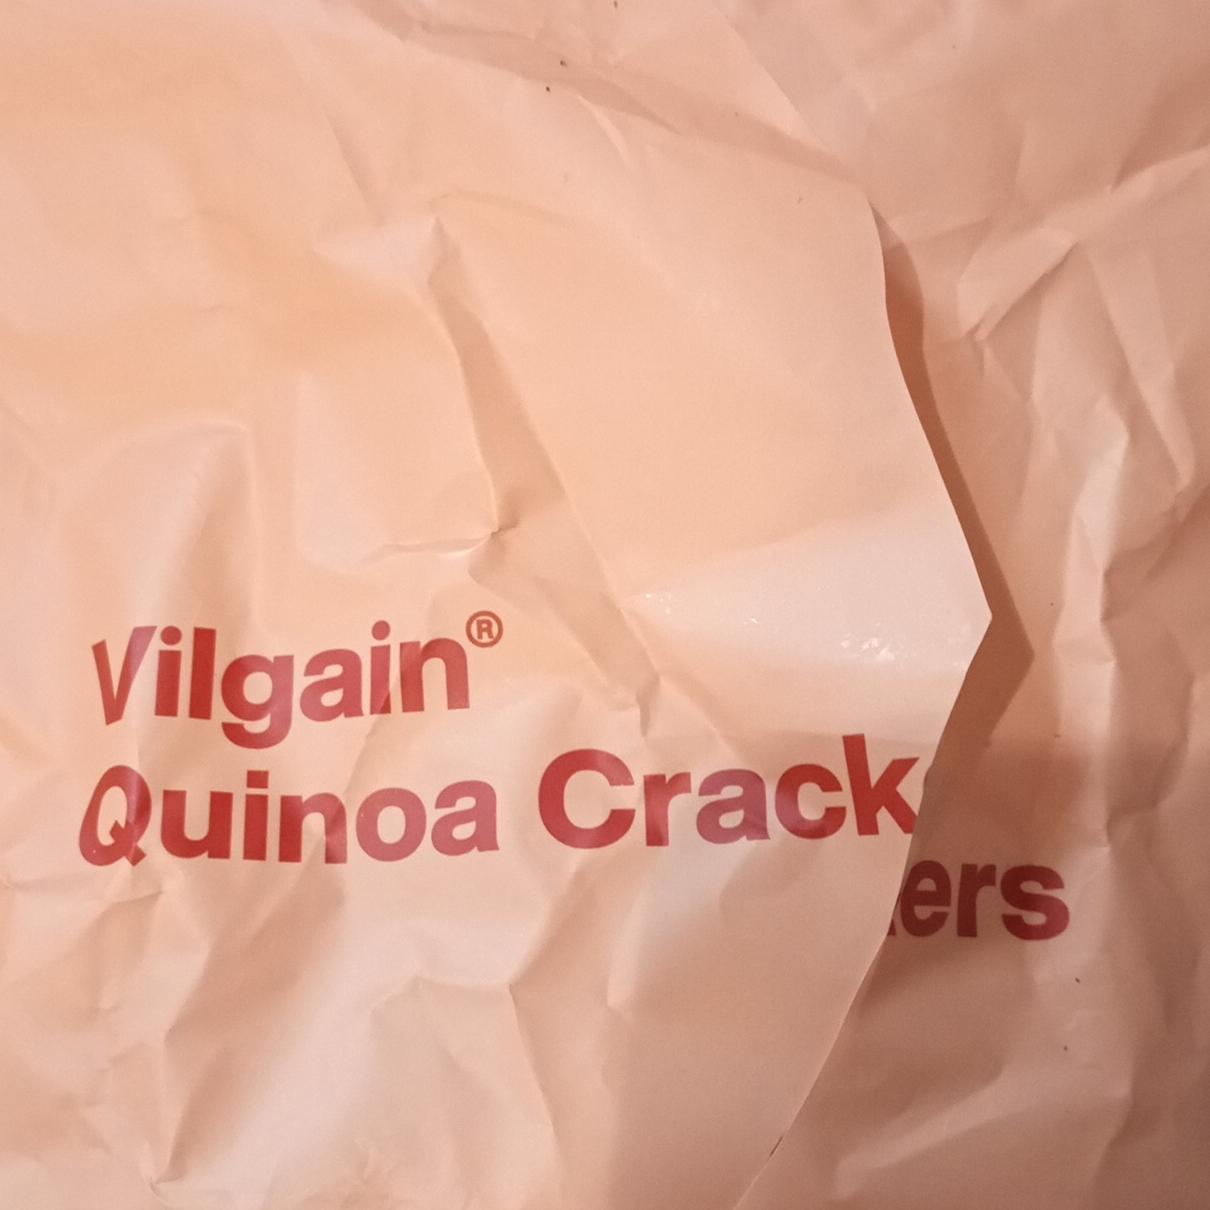 Fotografie - Quinoa Crackers Toamto Basil Vilgain